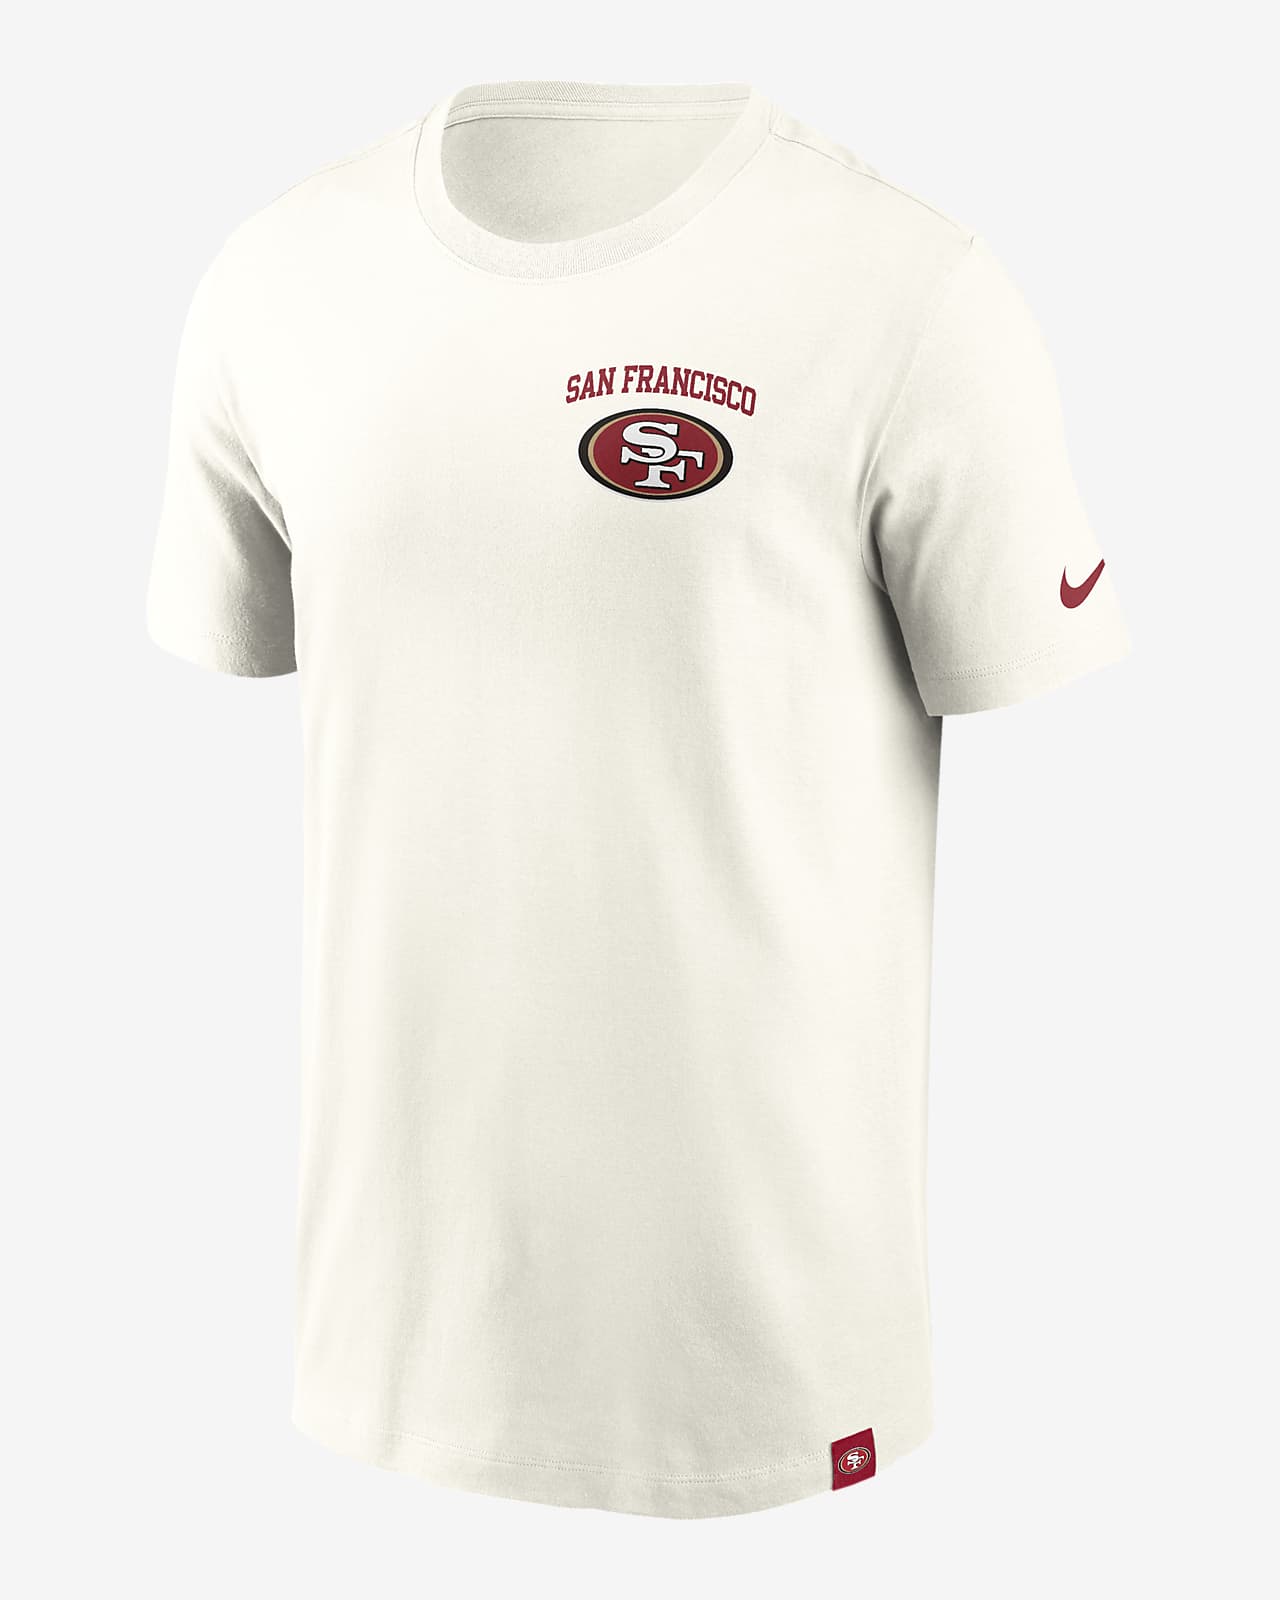 San Francisco 49ers Blitz Essential Men's Nike NFL T-Shirt